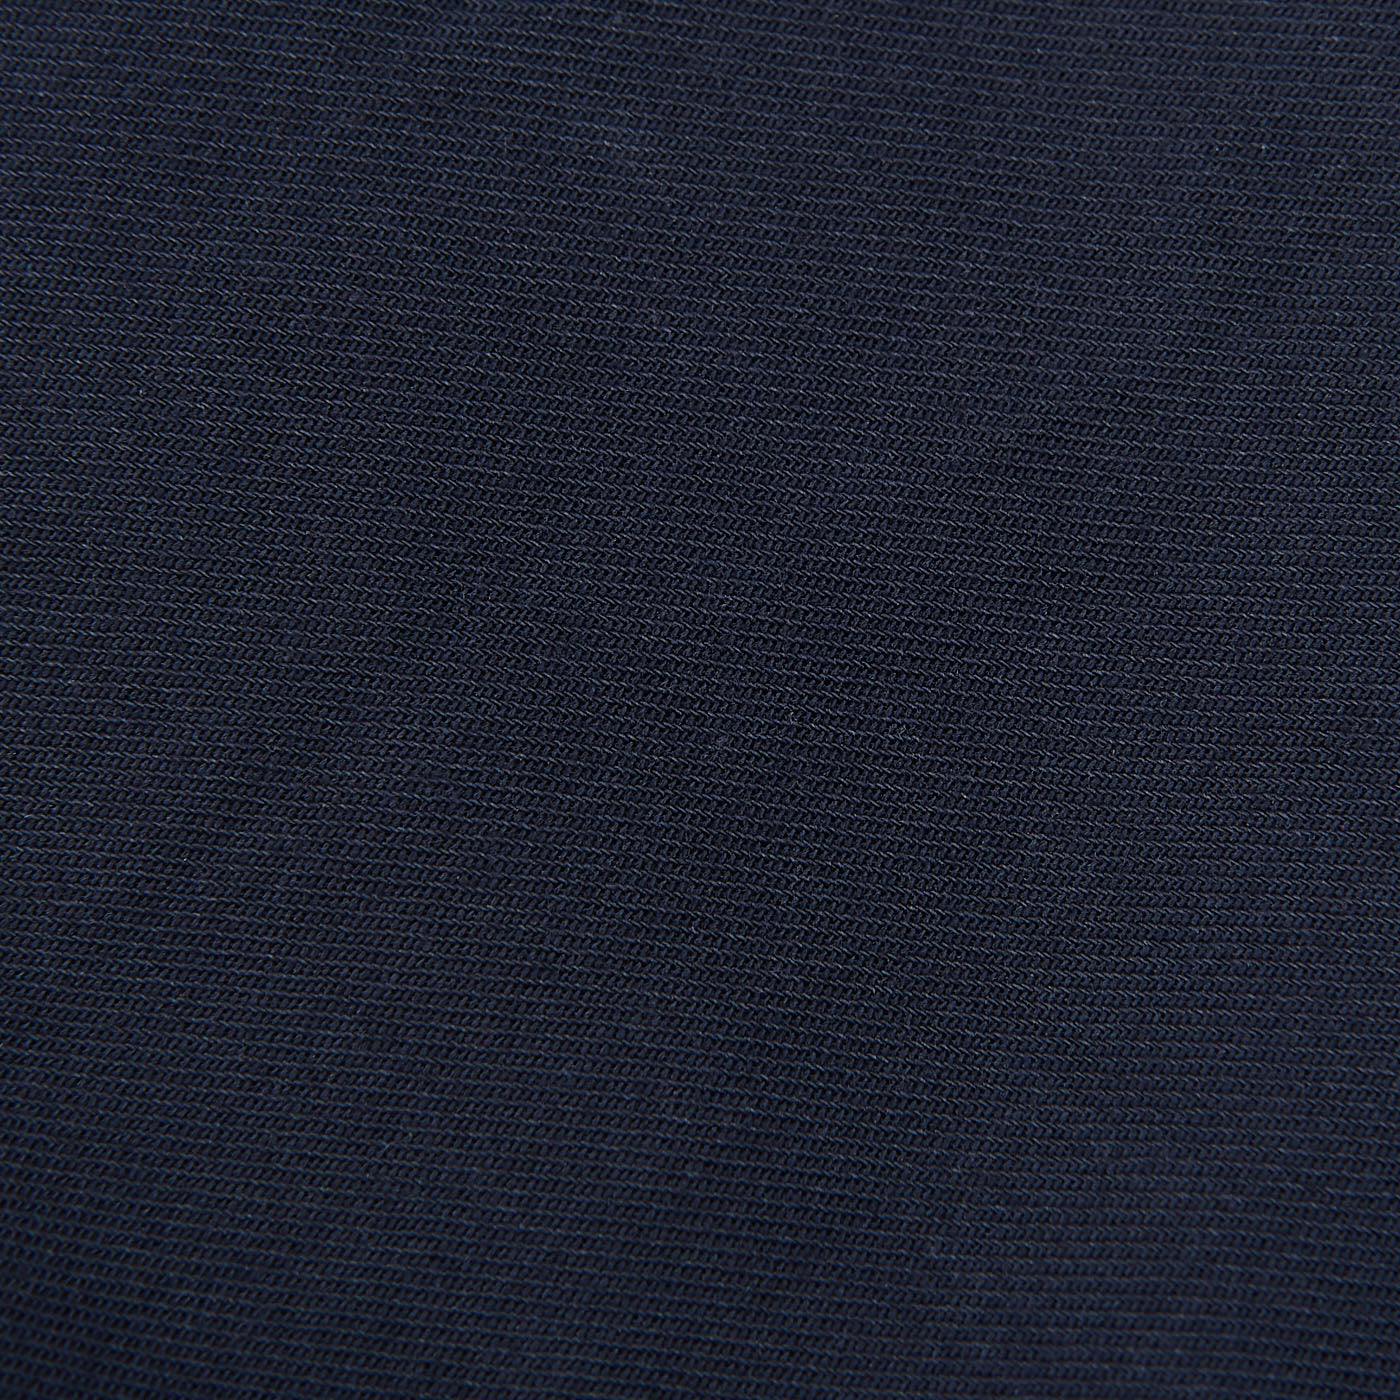 Sunspel Navy Blue Cotton Twill Pyjamas Trousers Fabric